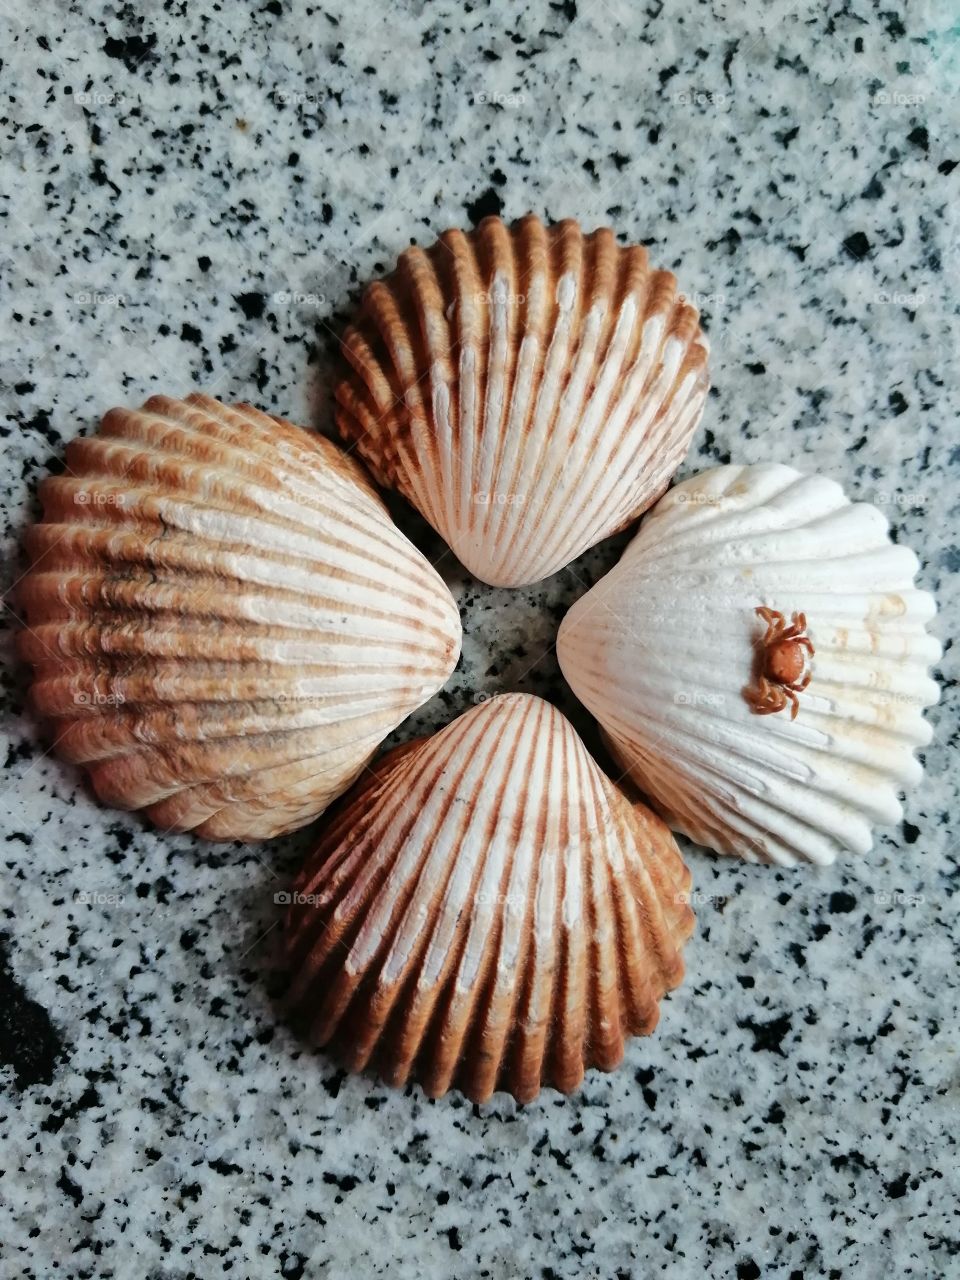 Colorful shells